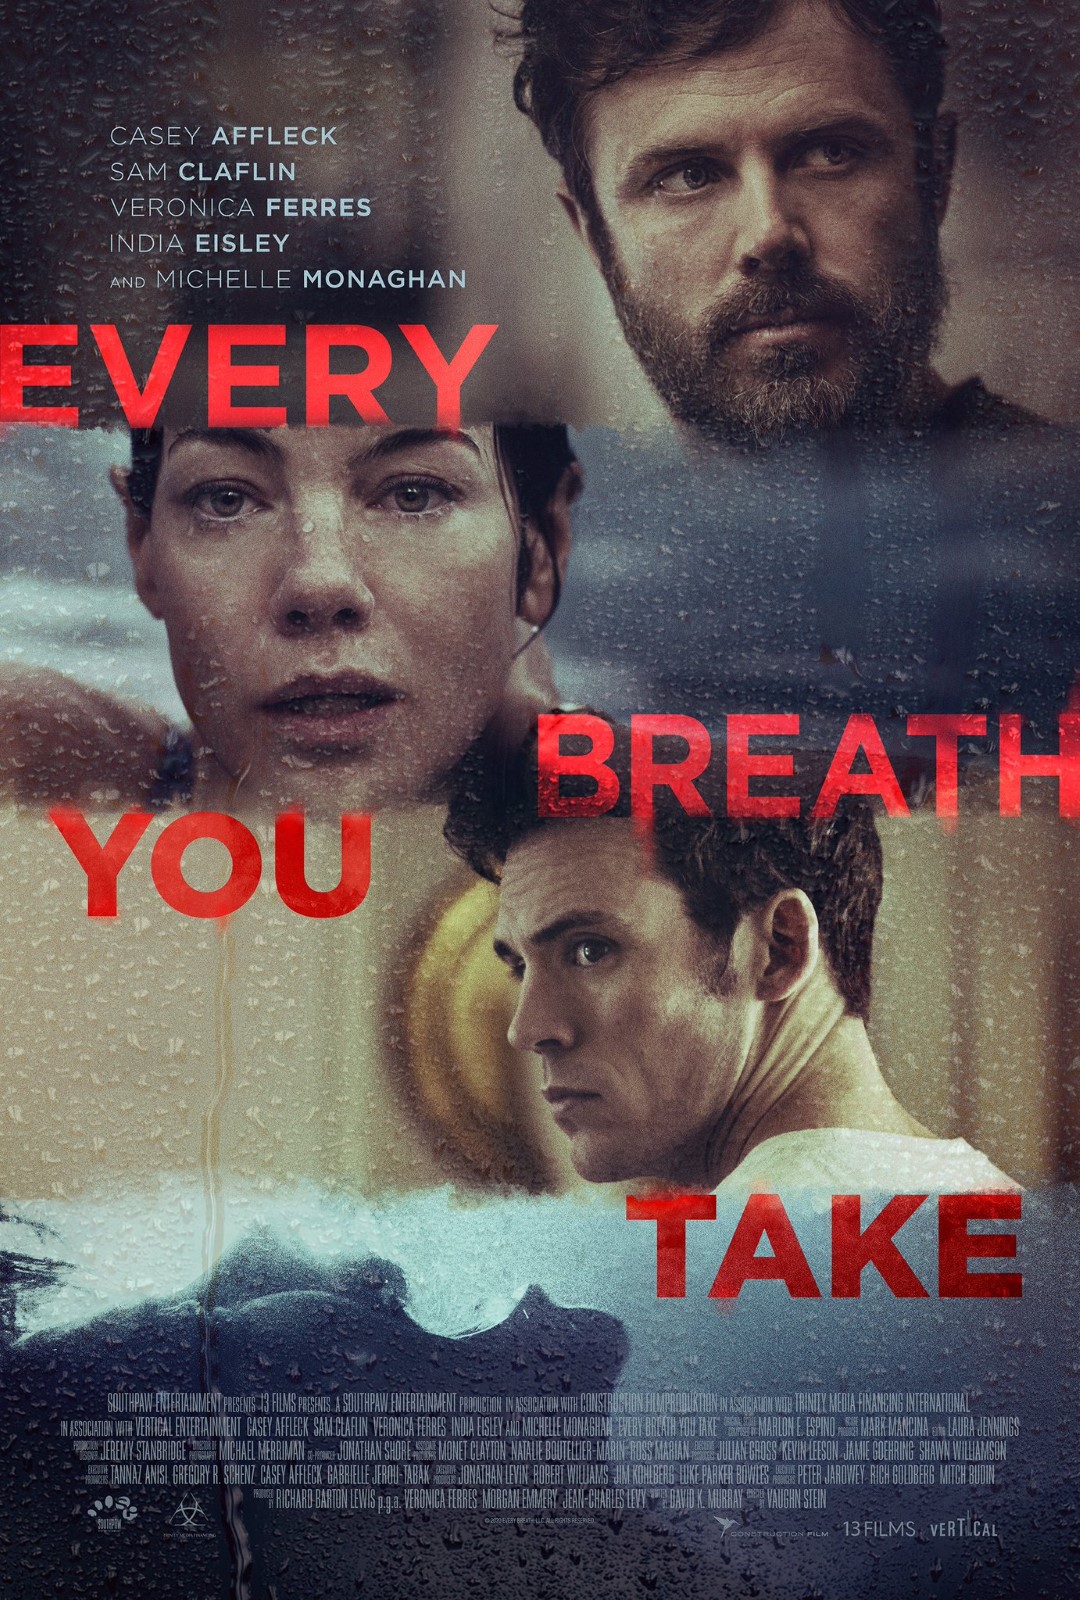 Every Breath You Take.jpg